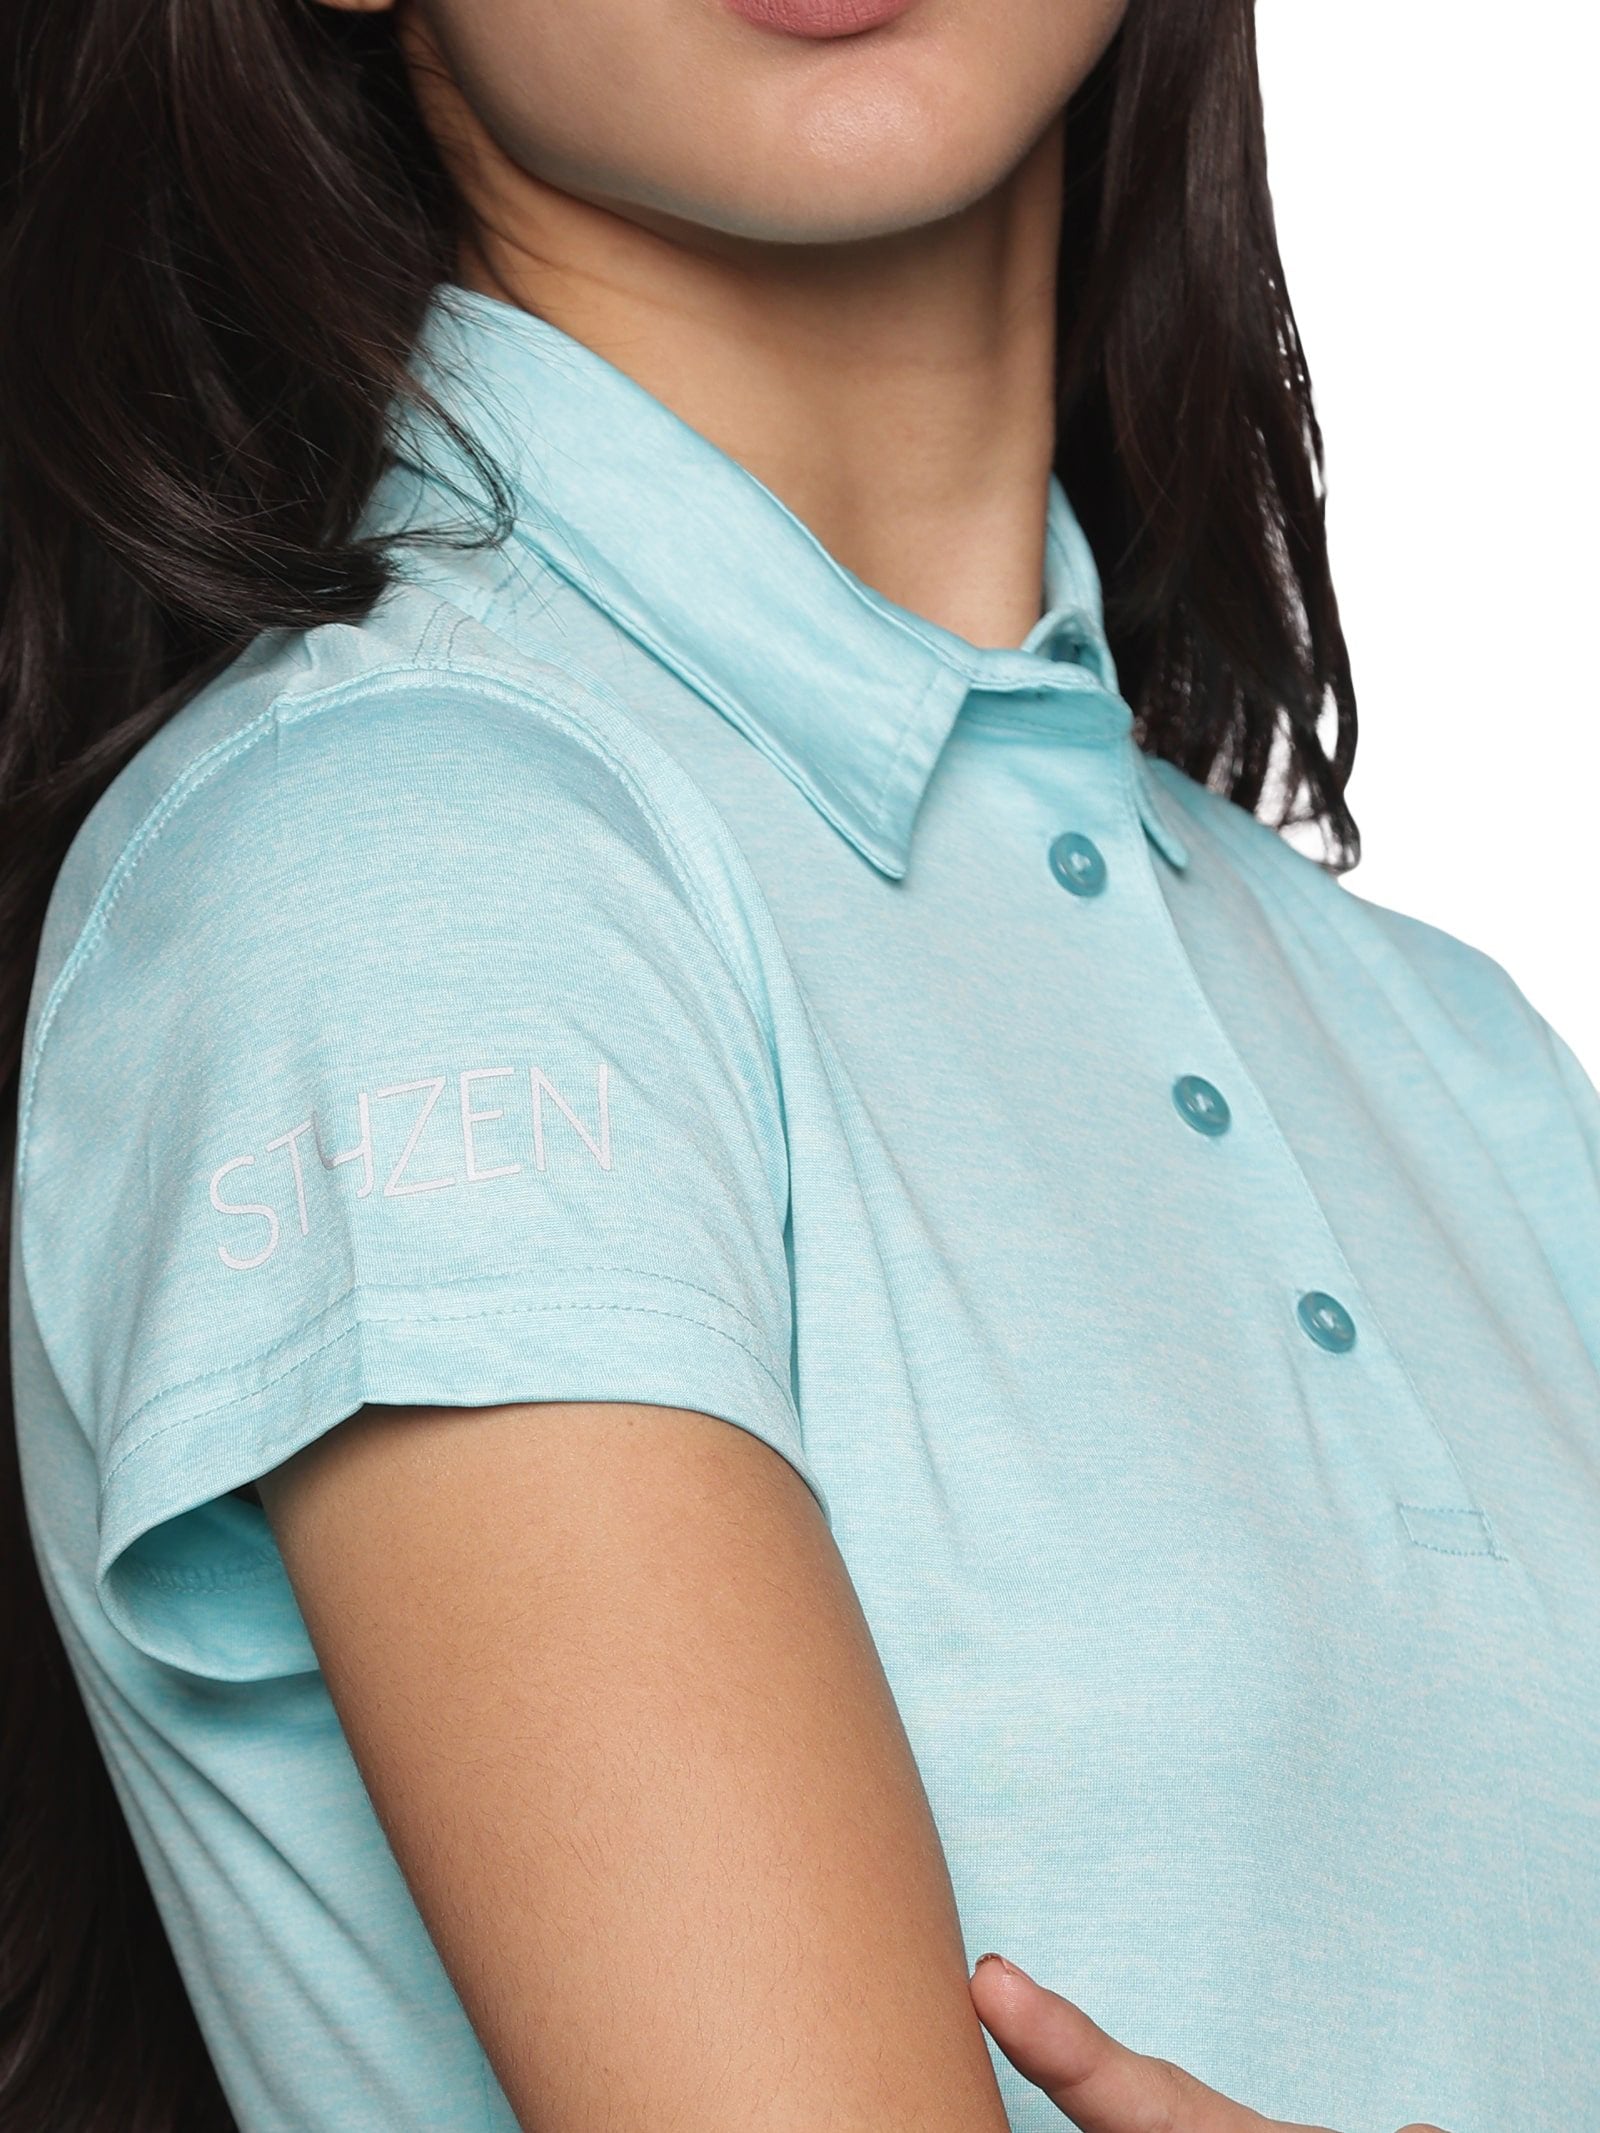 Styzen Women Golf Polo T-shirt